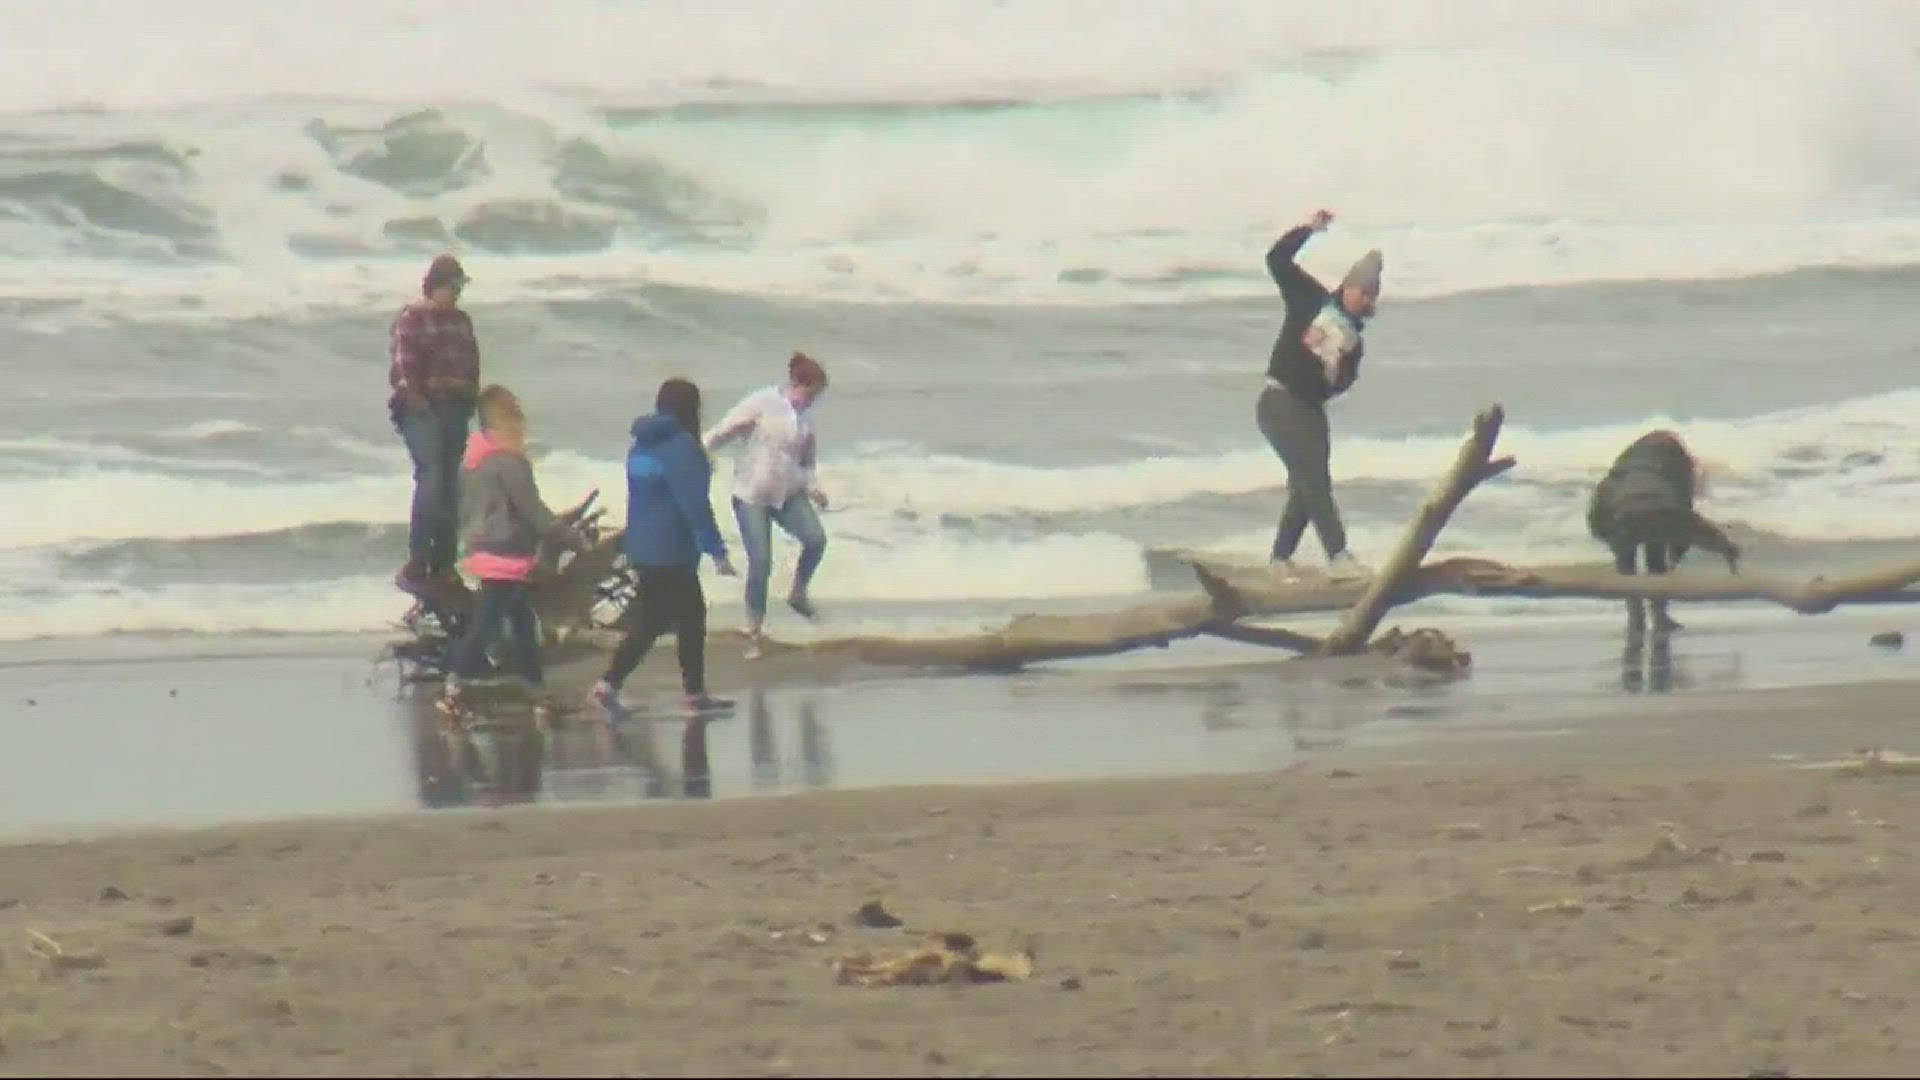 Beach logs pose serious risk